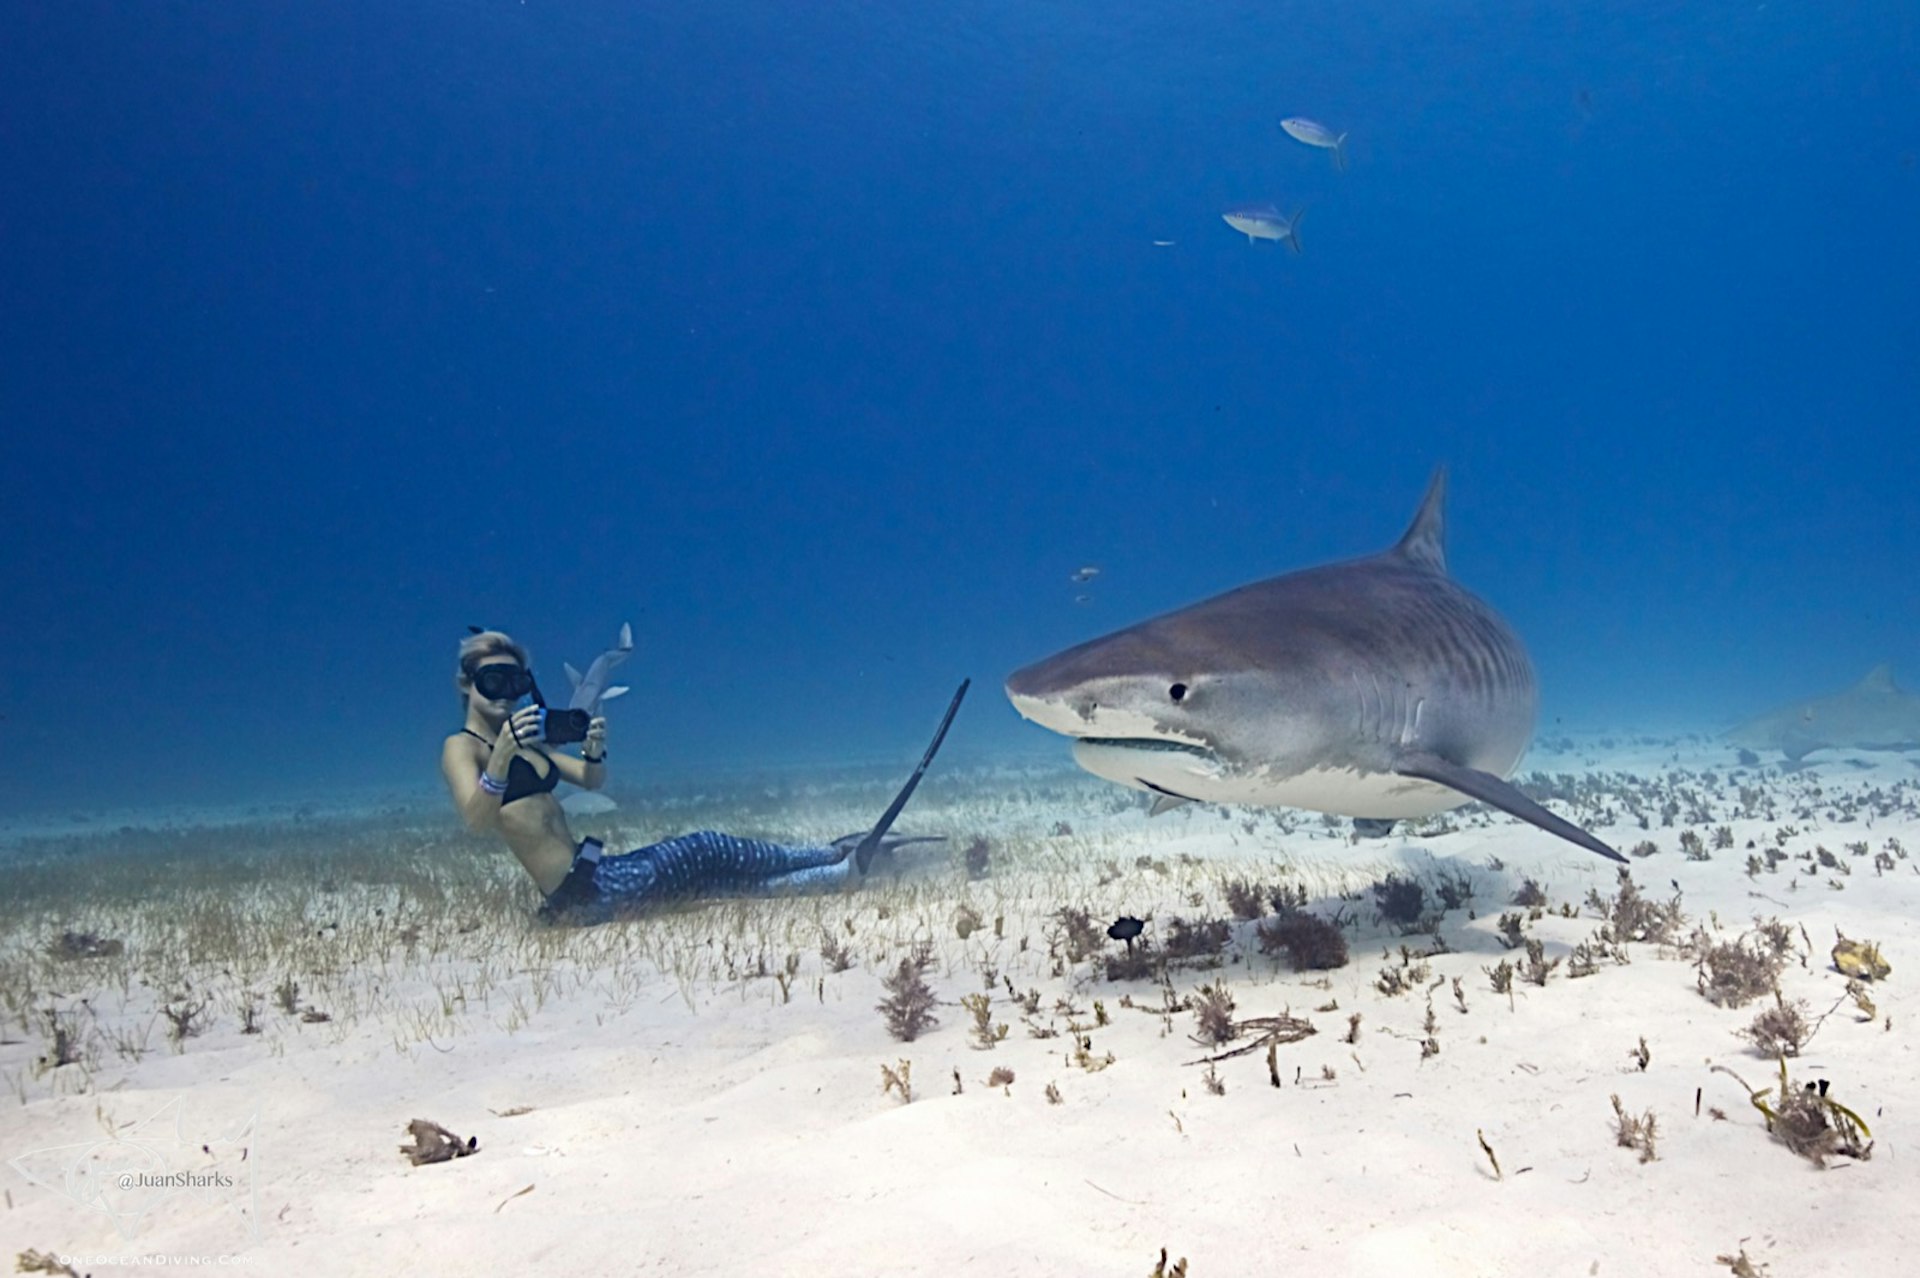 a woman photographs a large shark on the bottom of the sea